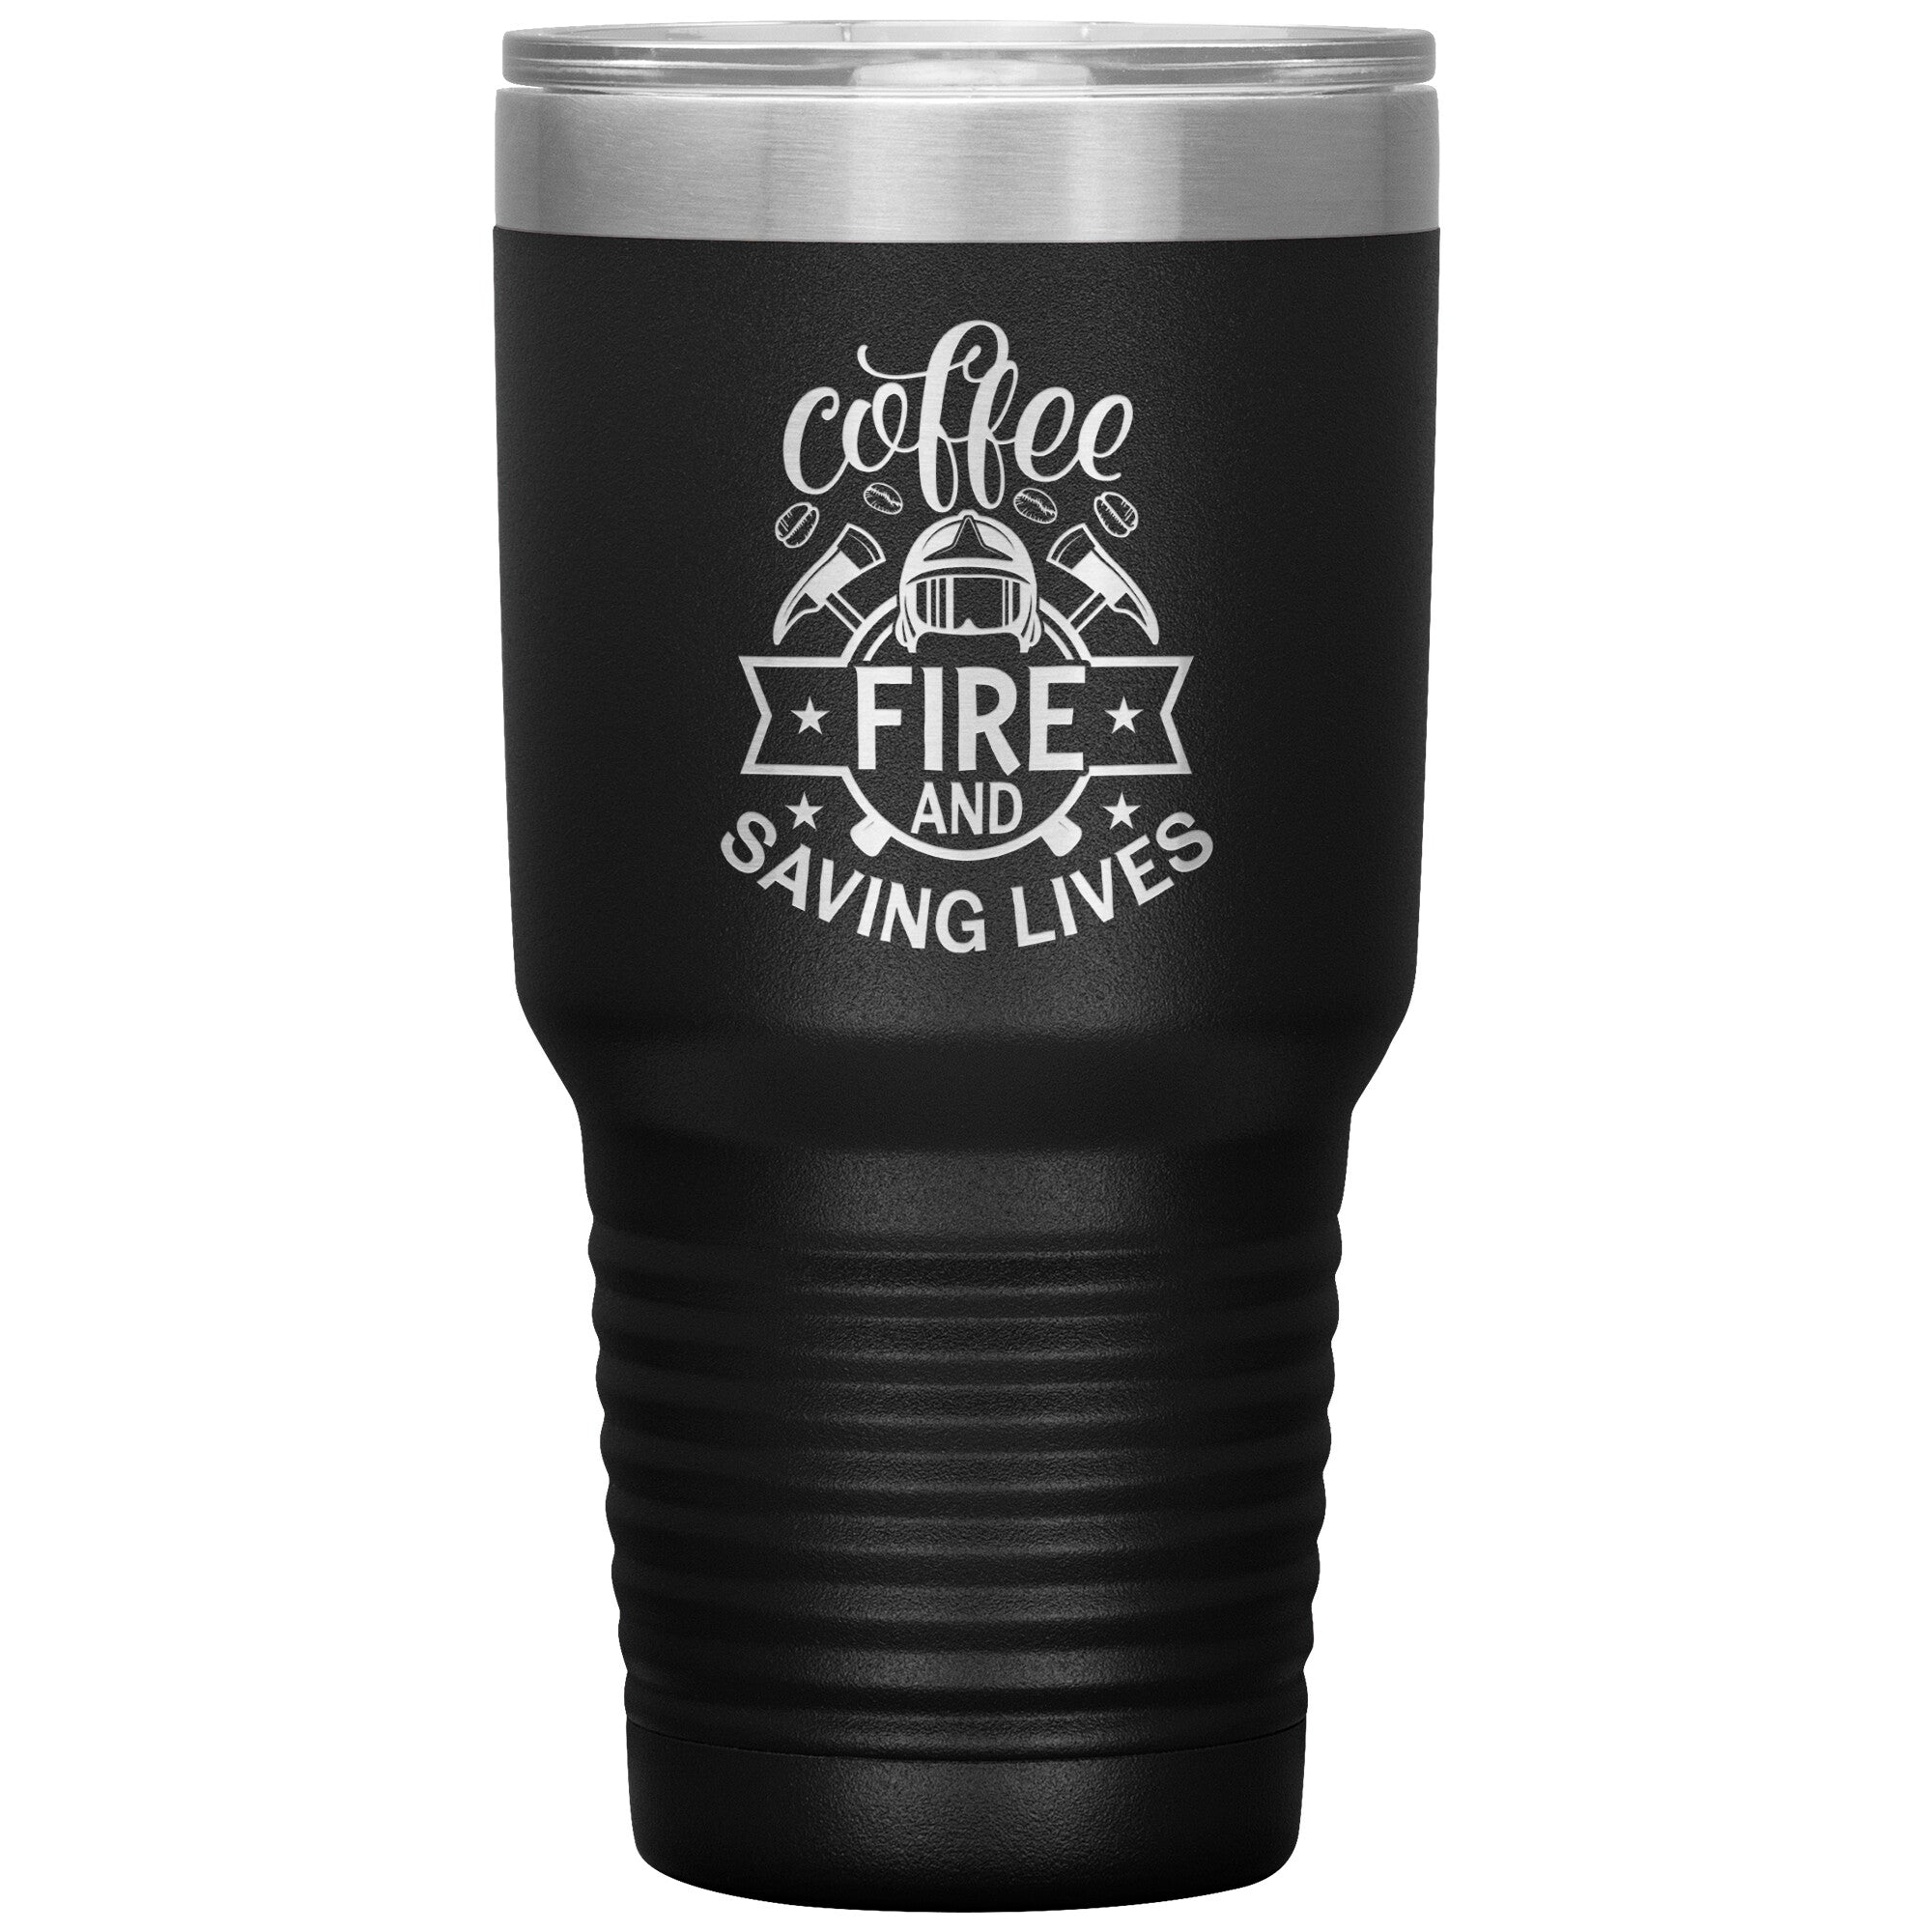 Coffee fire and saving lives